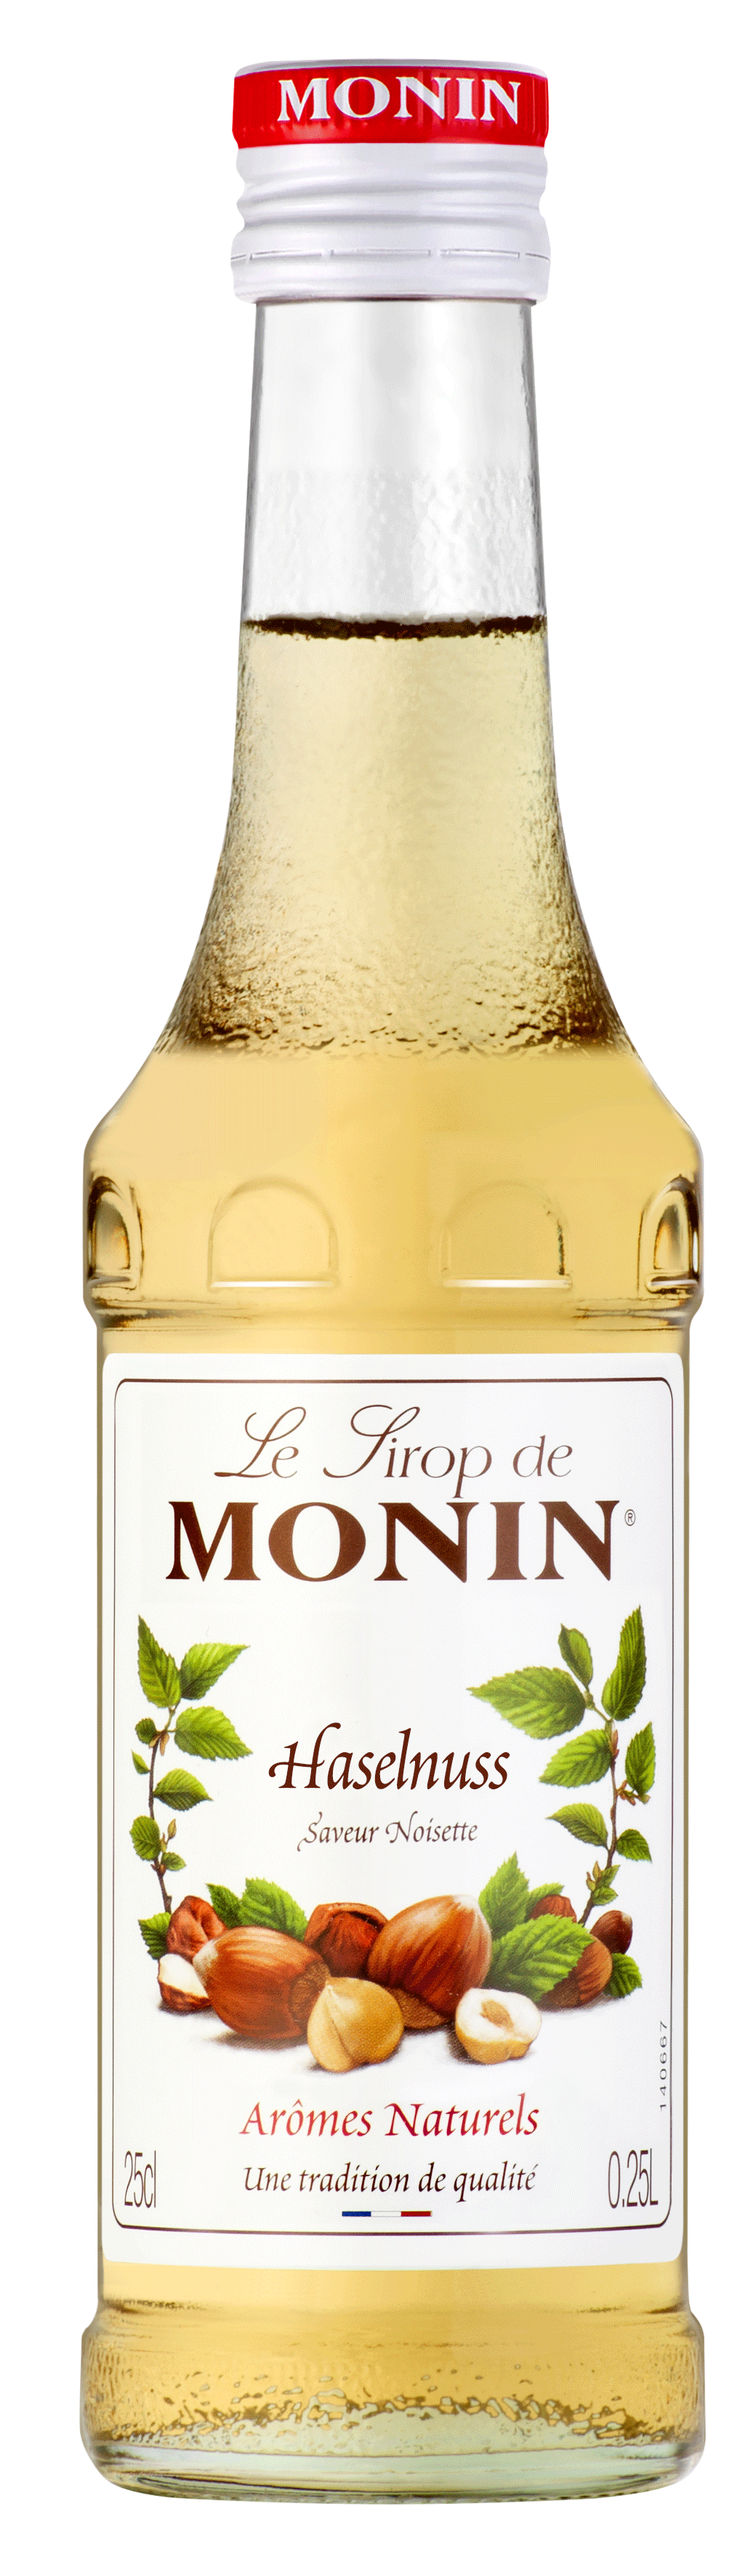 Monin - Sirop de Noisette - 1L